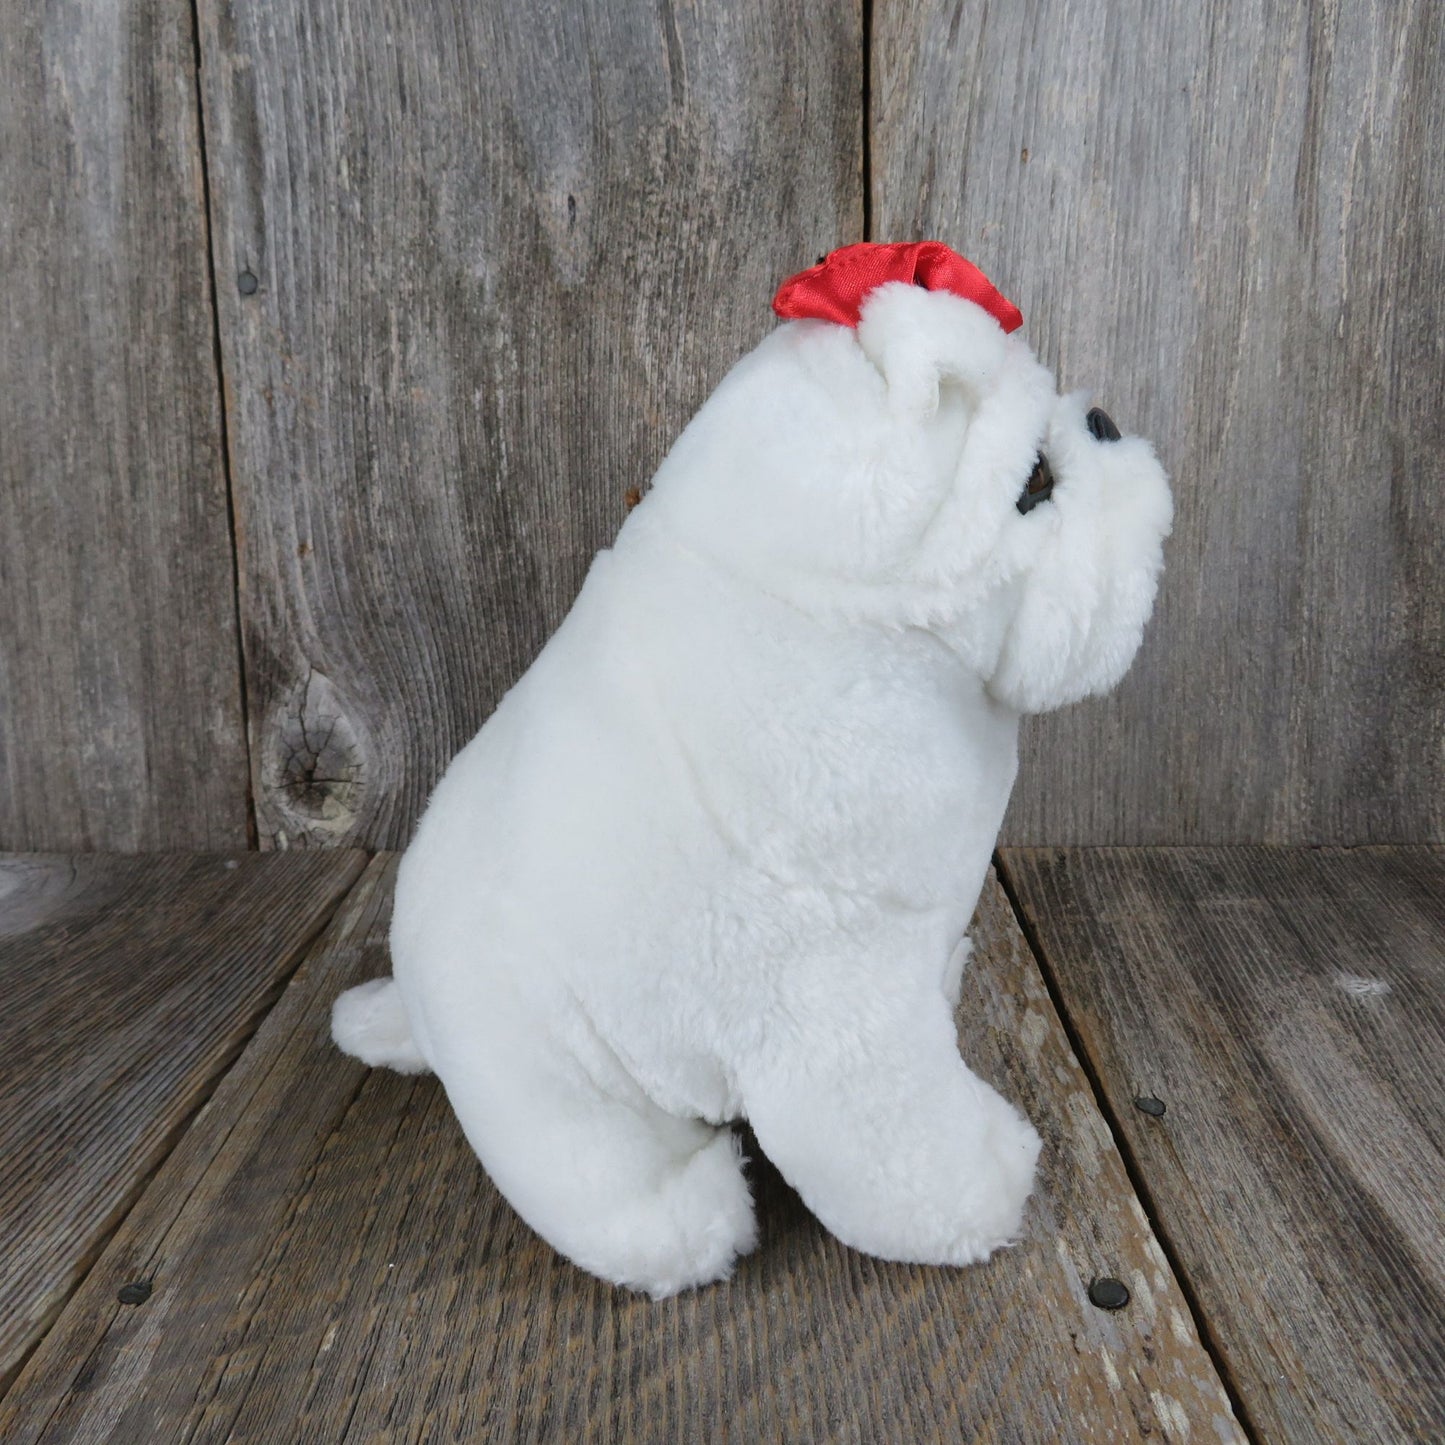 Vintage English Bulldog Dog Plush White Red Bow Stuffed Animal Puppy